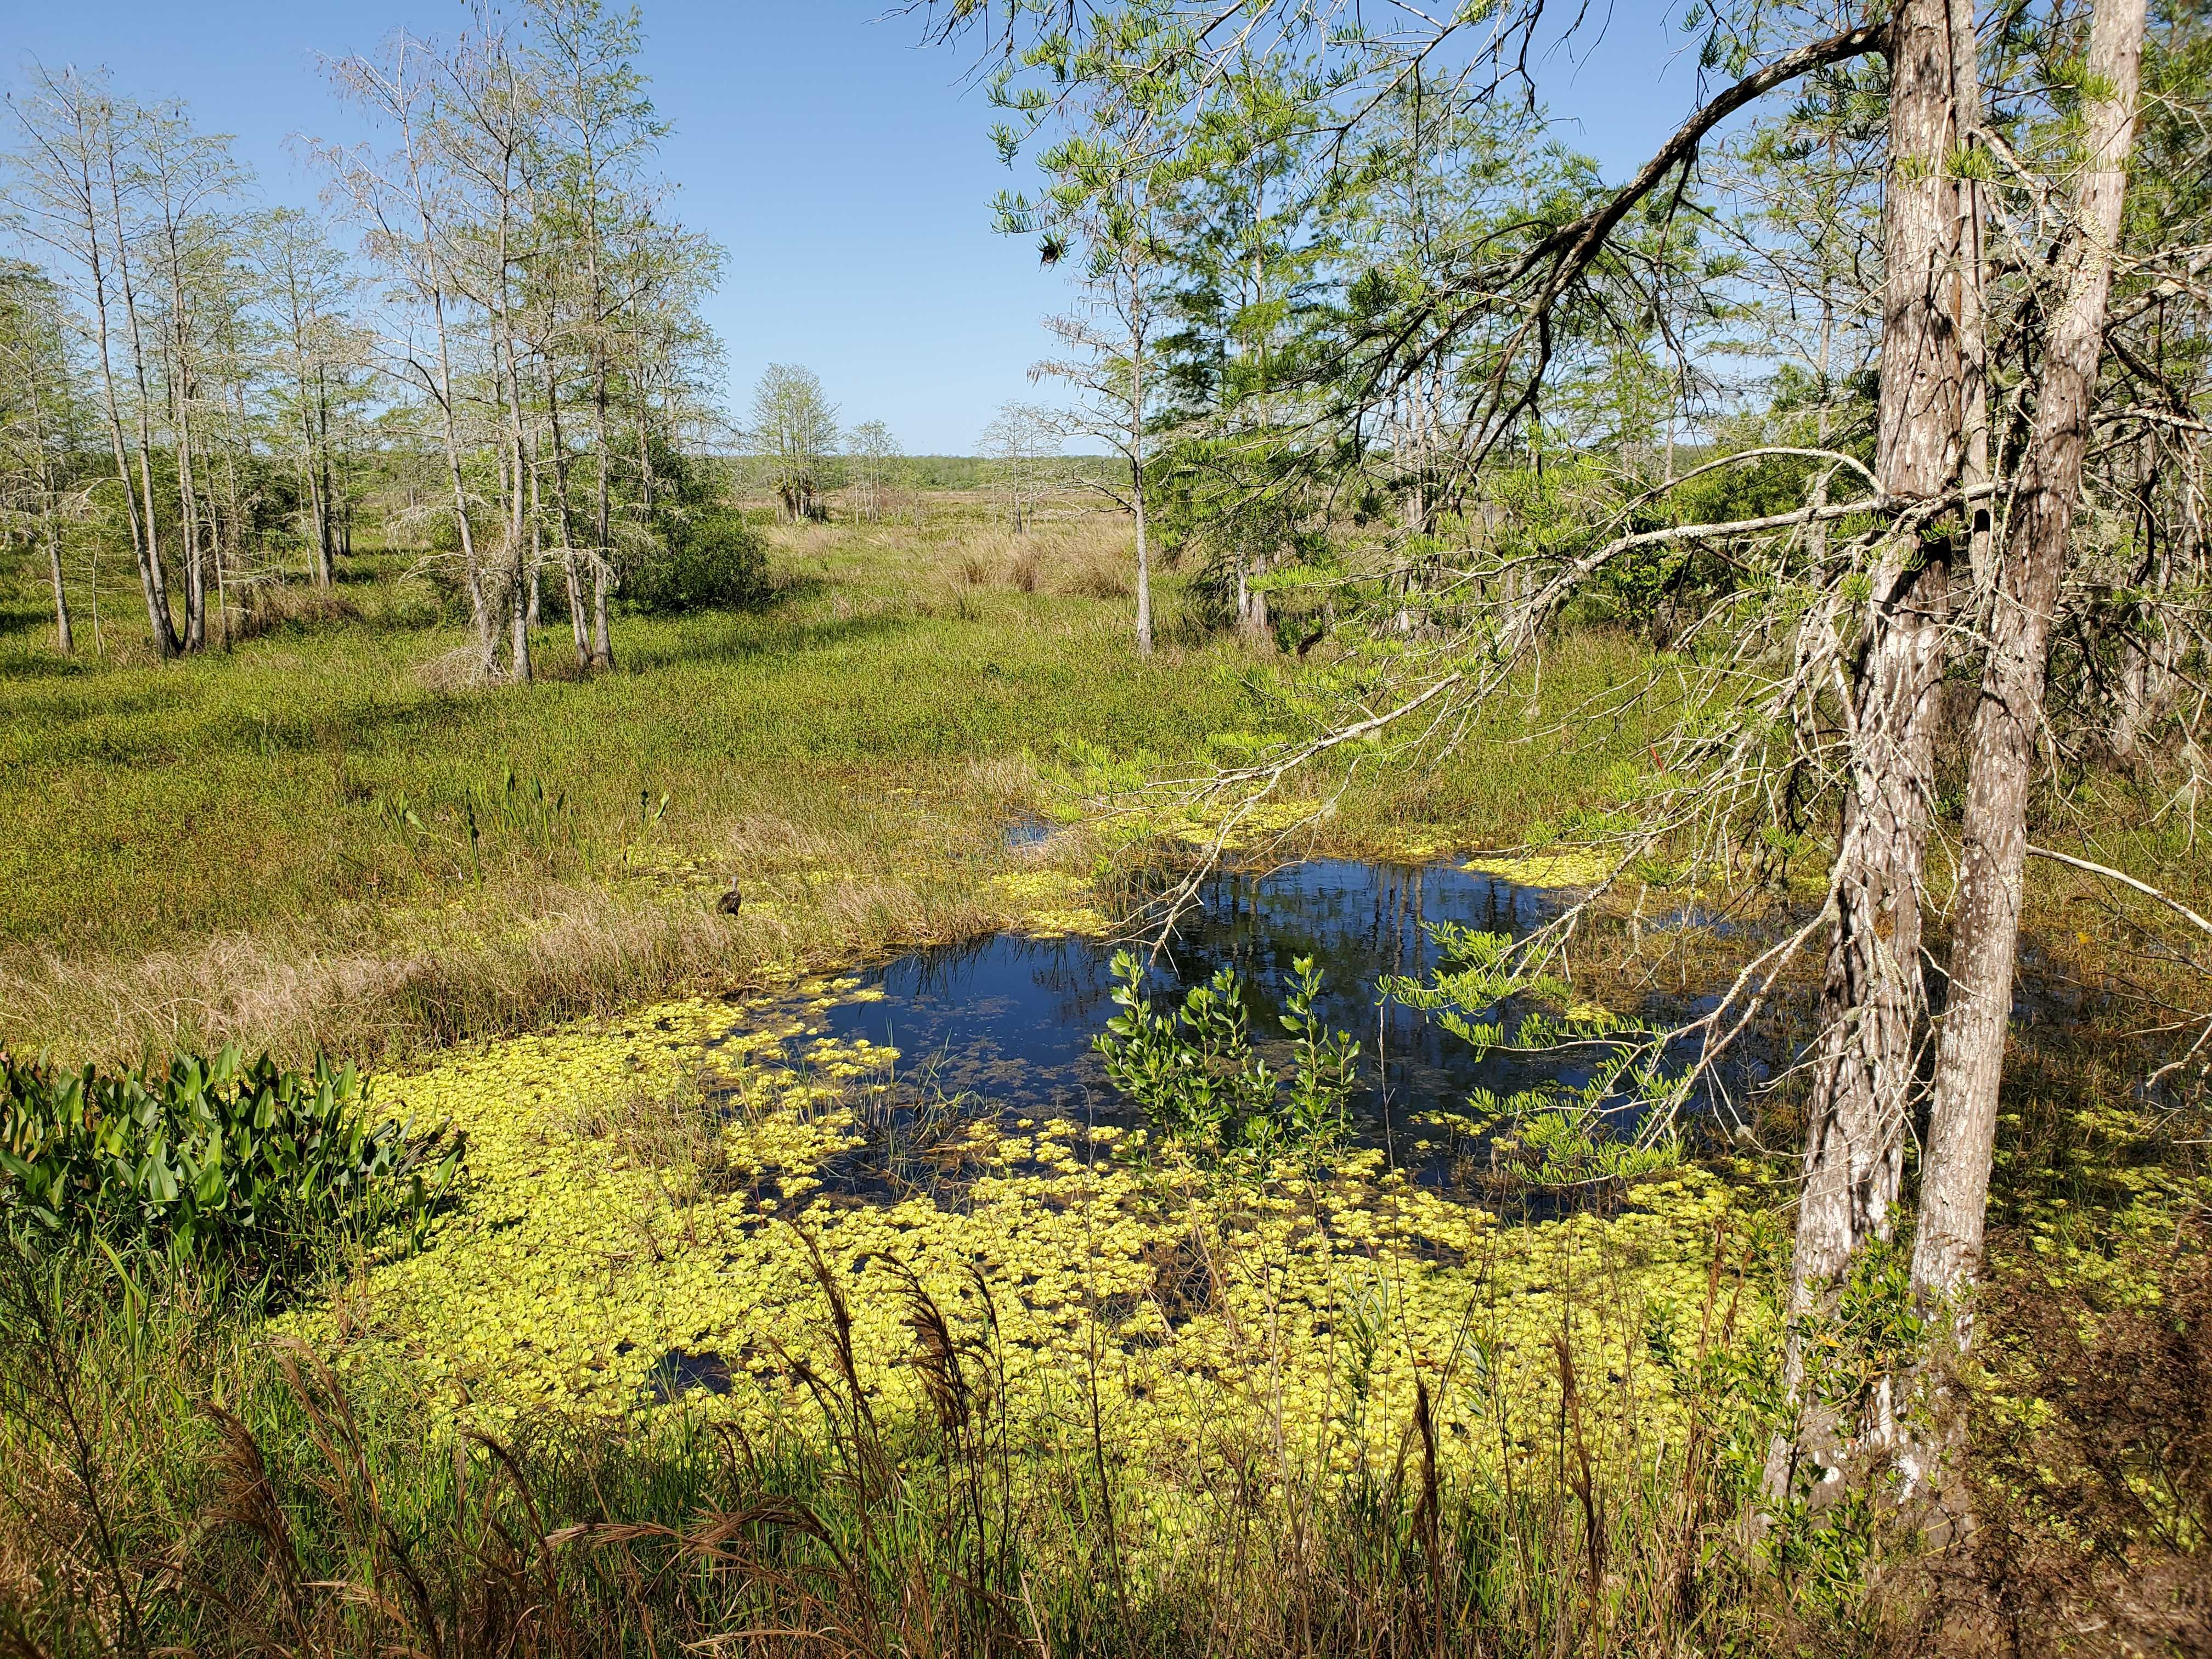 View of wetland habitat.